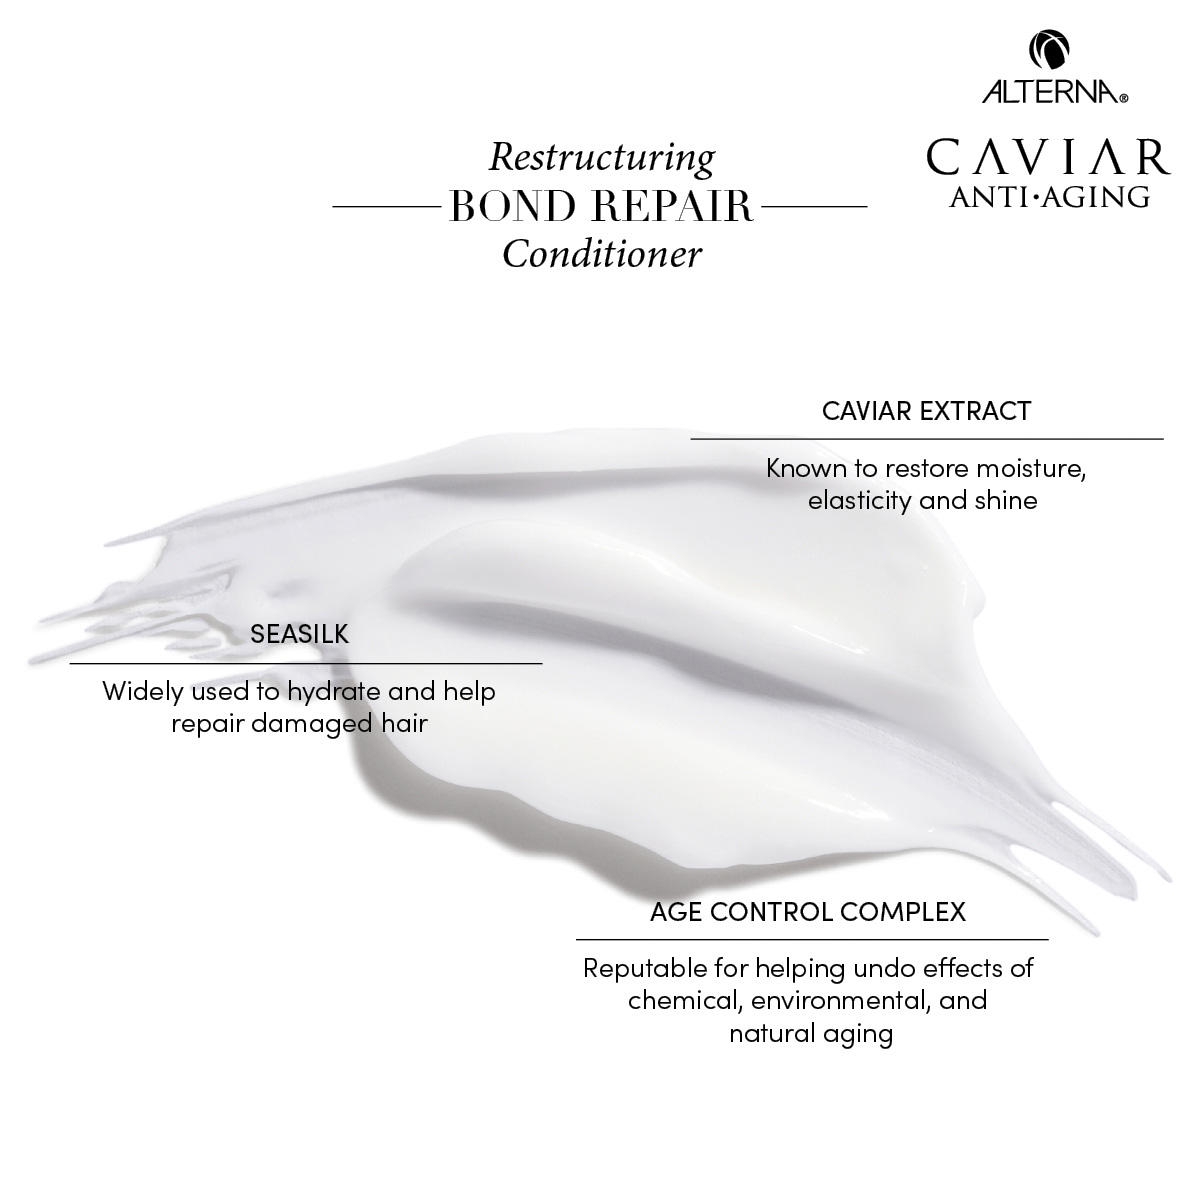 Alterna Caviar Anti-Aging Restructuring Bond Repair Condizionatore 250 ml - 4